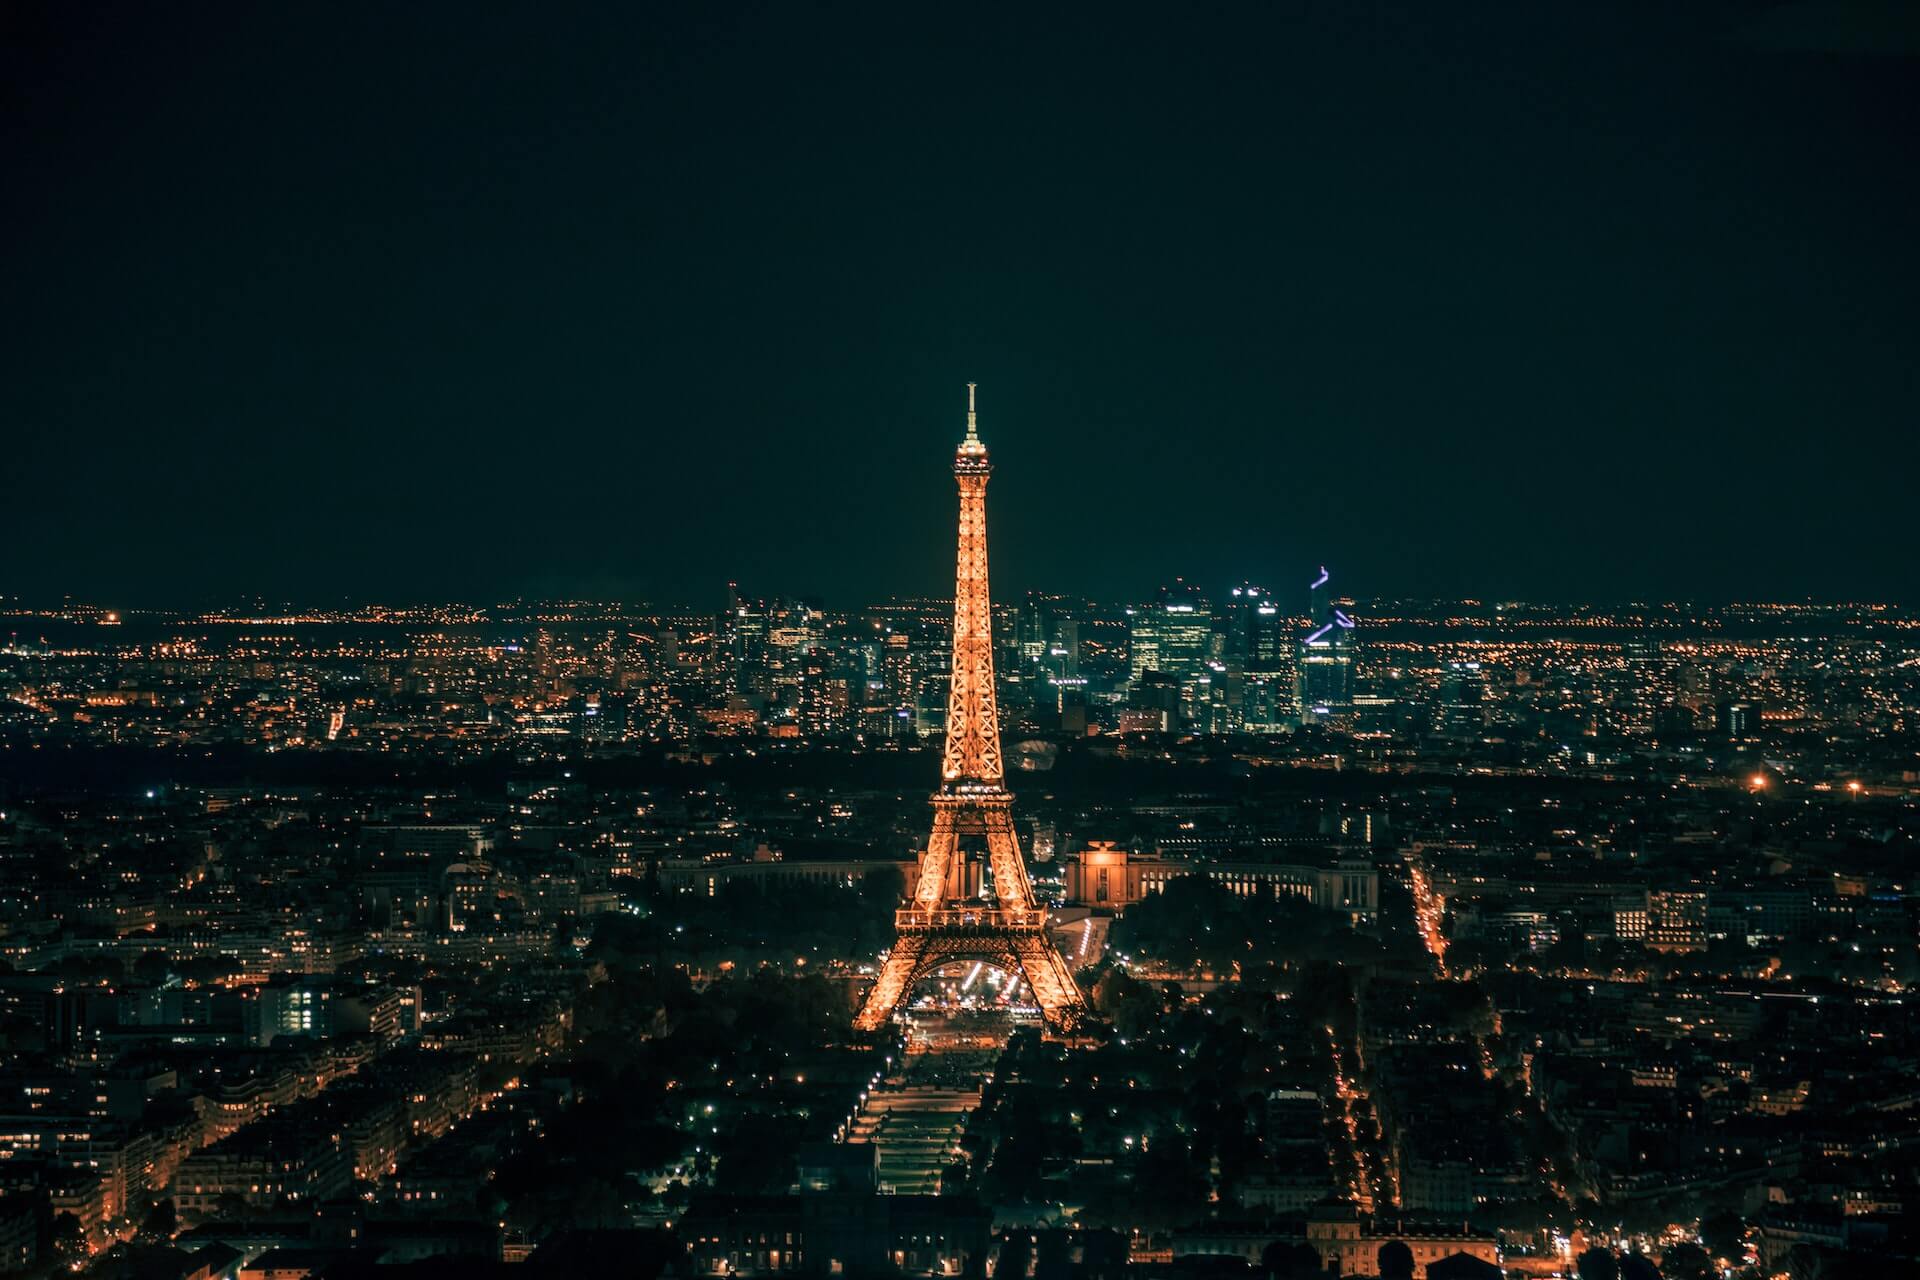 Night shot of the Eiffel tower in Paris